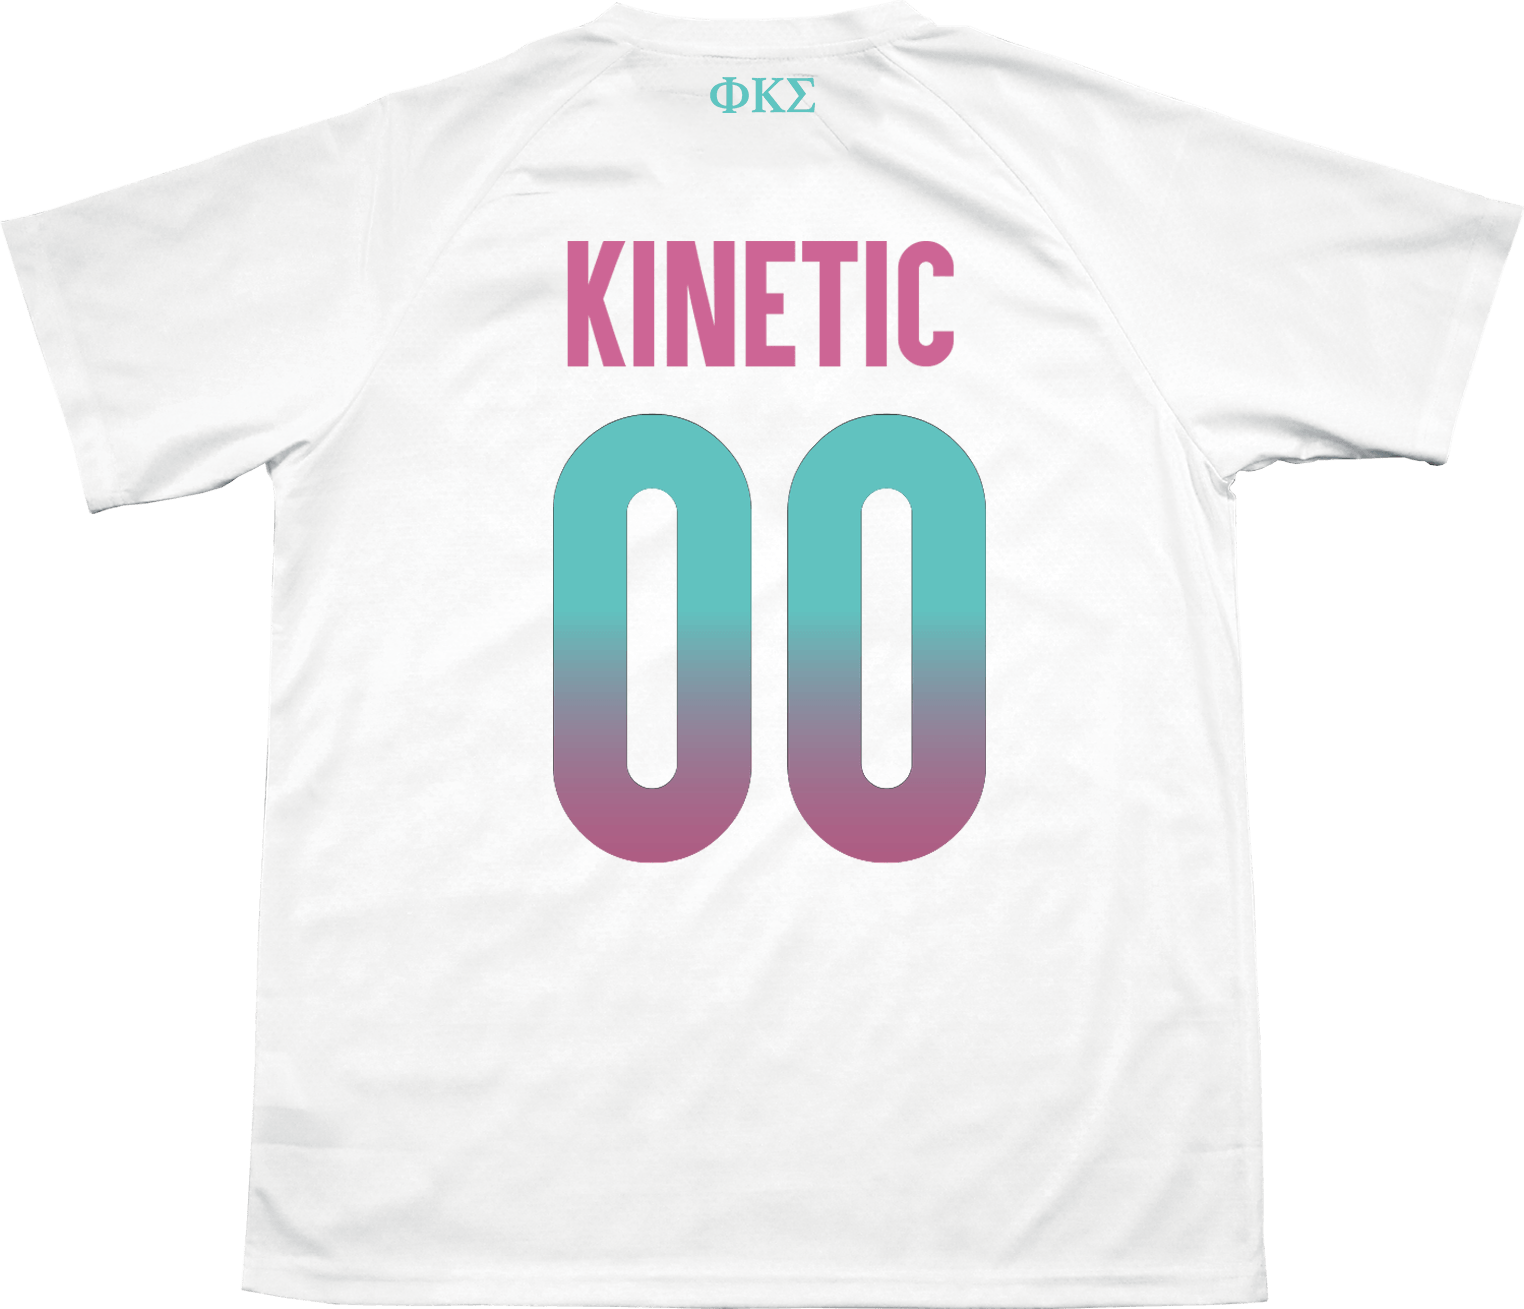 Phi Kappa Sigma - White Candy Floss Soccer Jersey - Kinetic Society